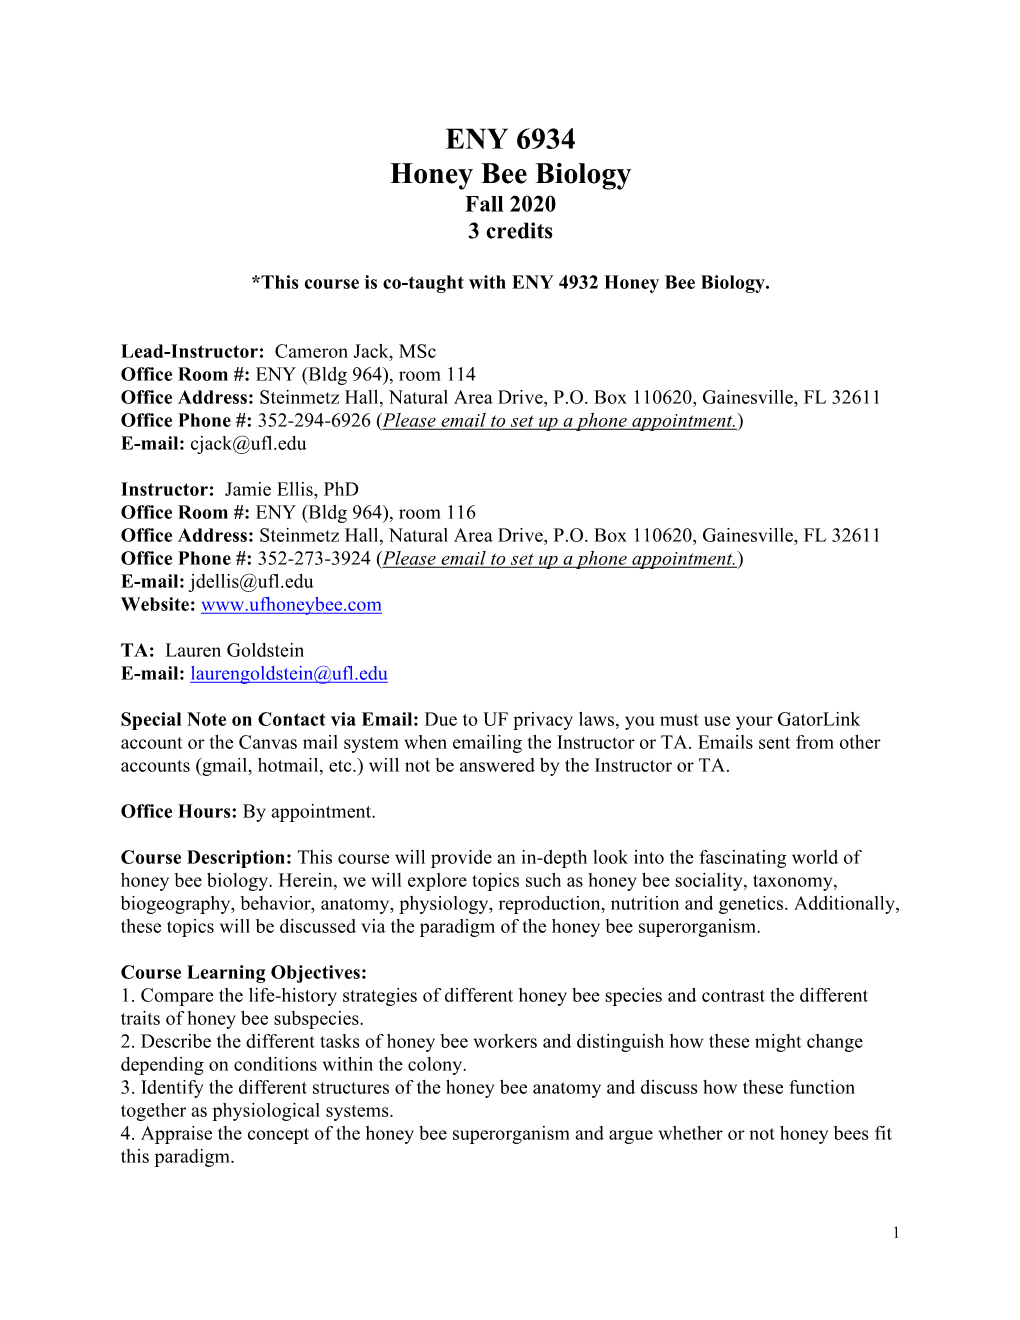 ENY 6934 Honey Bee Biology Fall 2020 3 Credits